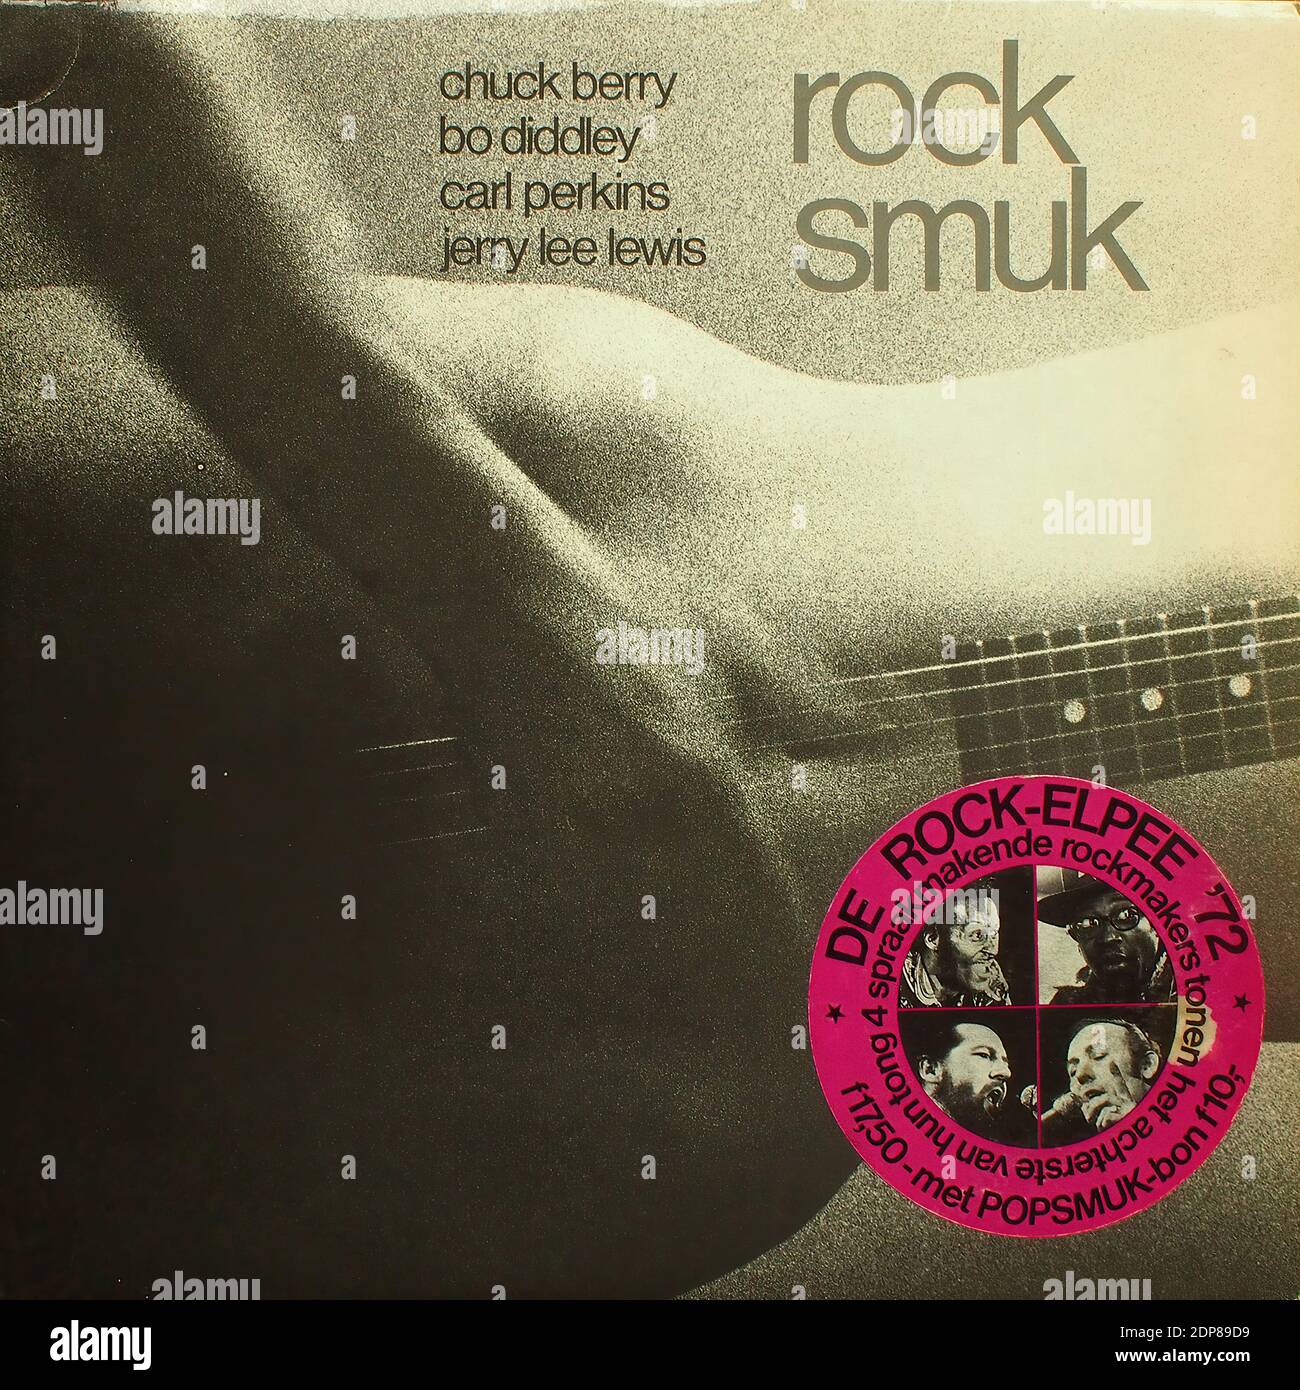 Rock Smuk - De Rock-Elpee 1972 - Chuck Berry, Bo Diddley, Carl Perkins, Jerry Lee Lewis - Vintage vinyl album cover Stock Photo